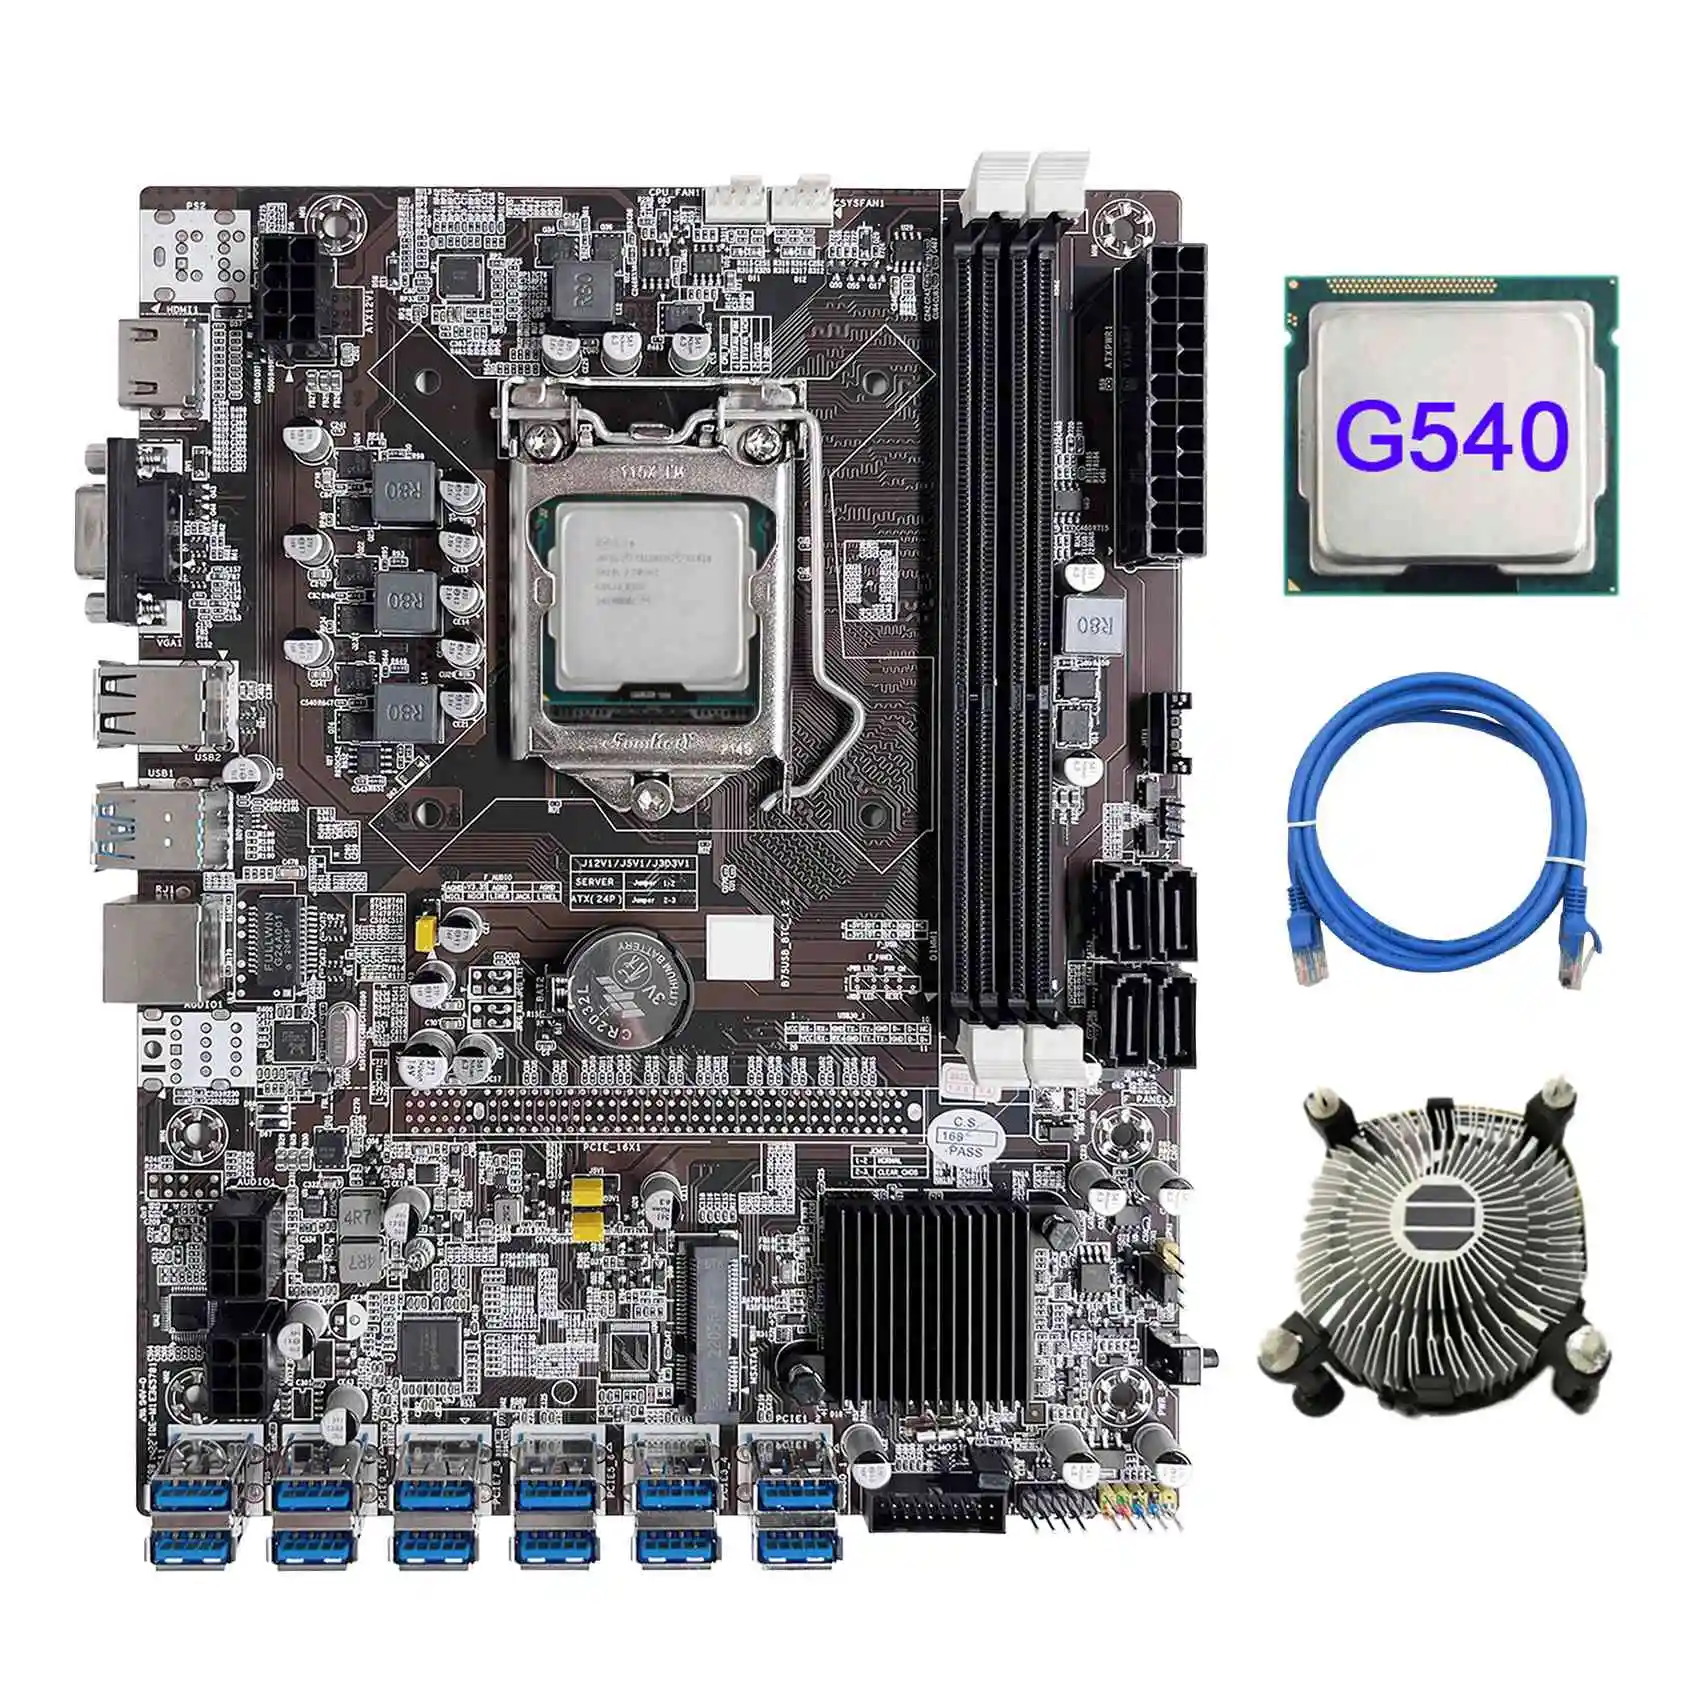 

B75 12 Card BTC Mining Motherboard+G540 CPU+Cooling Fan+RJ45 Network Cable 12XUSB3.0(PCIE) Slot LGA1155 DDR3 RAM MSATA